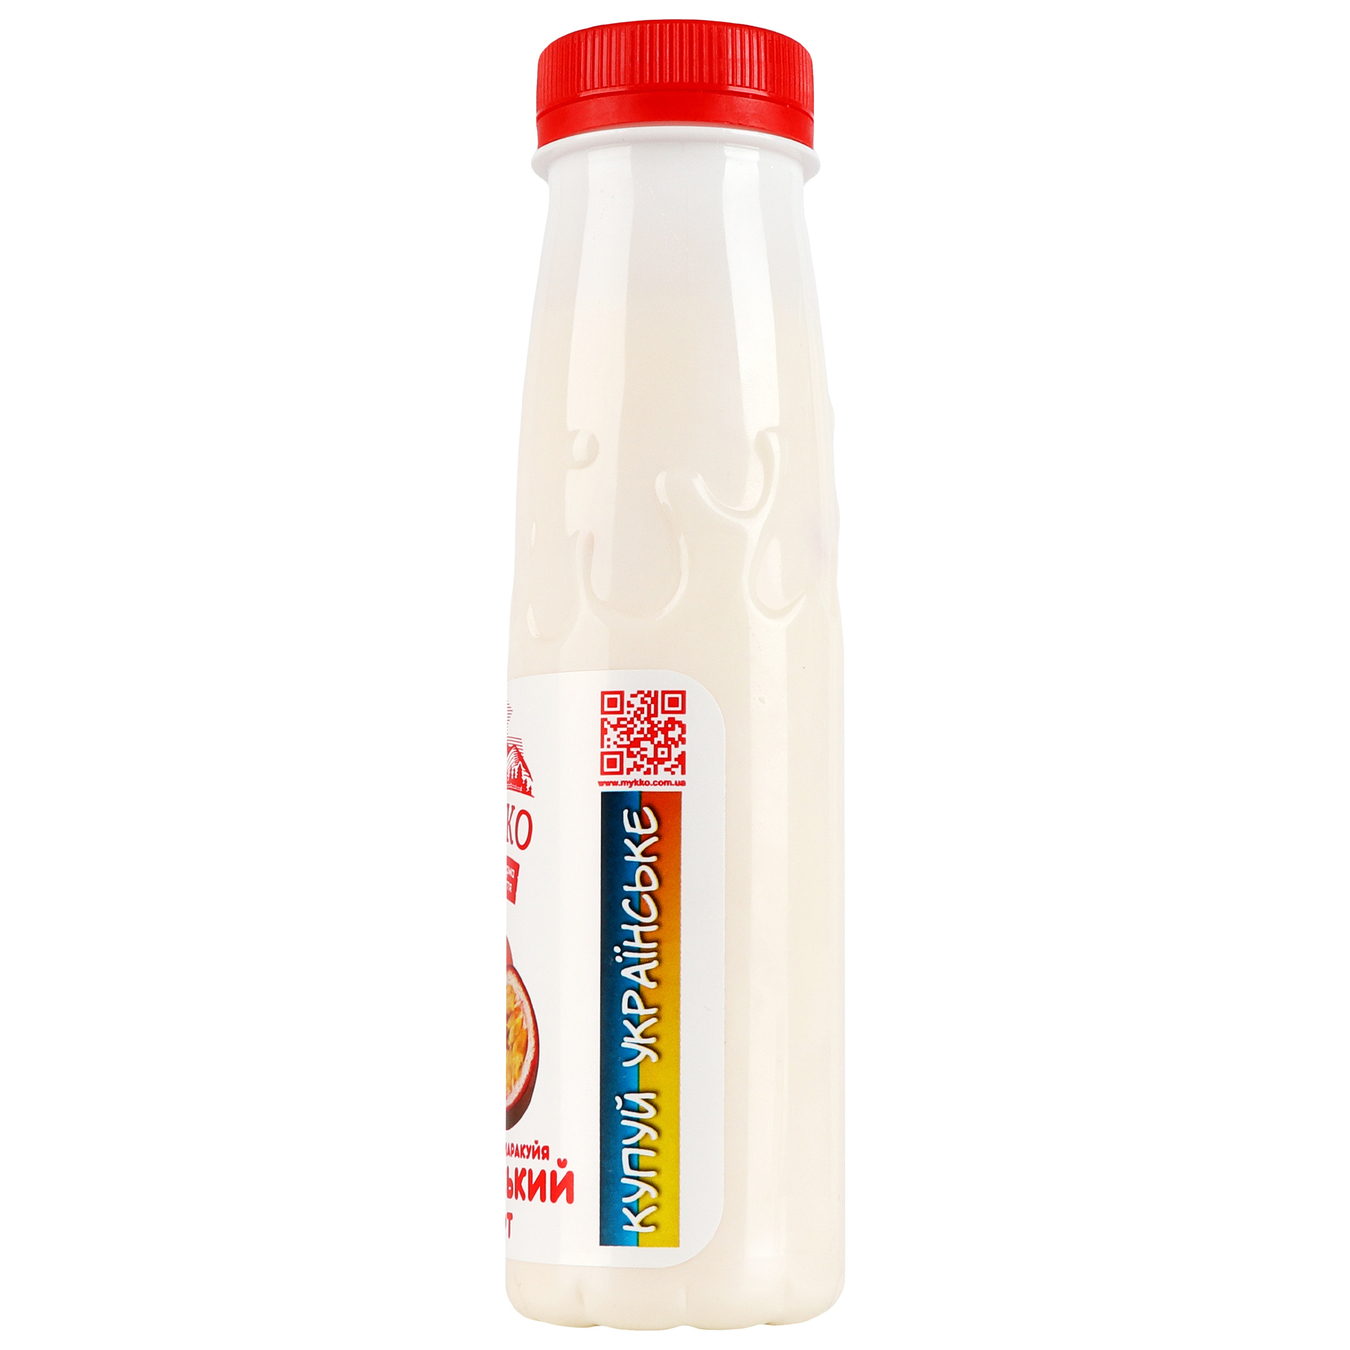 Yogurt Mukko peach-passion fruit 2.6% 250g bottle 3